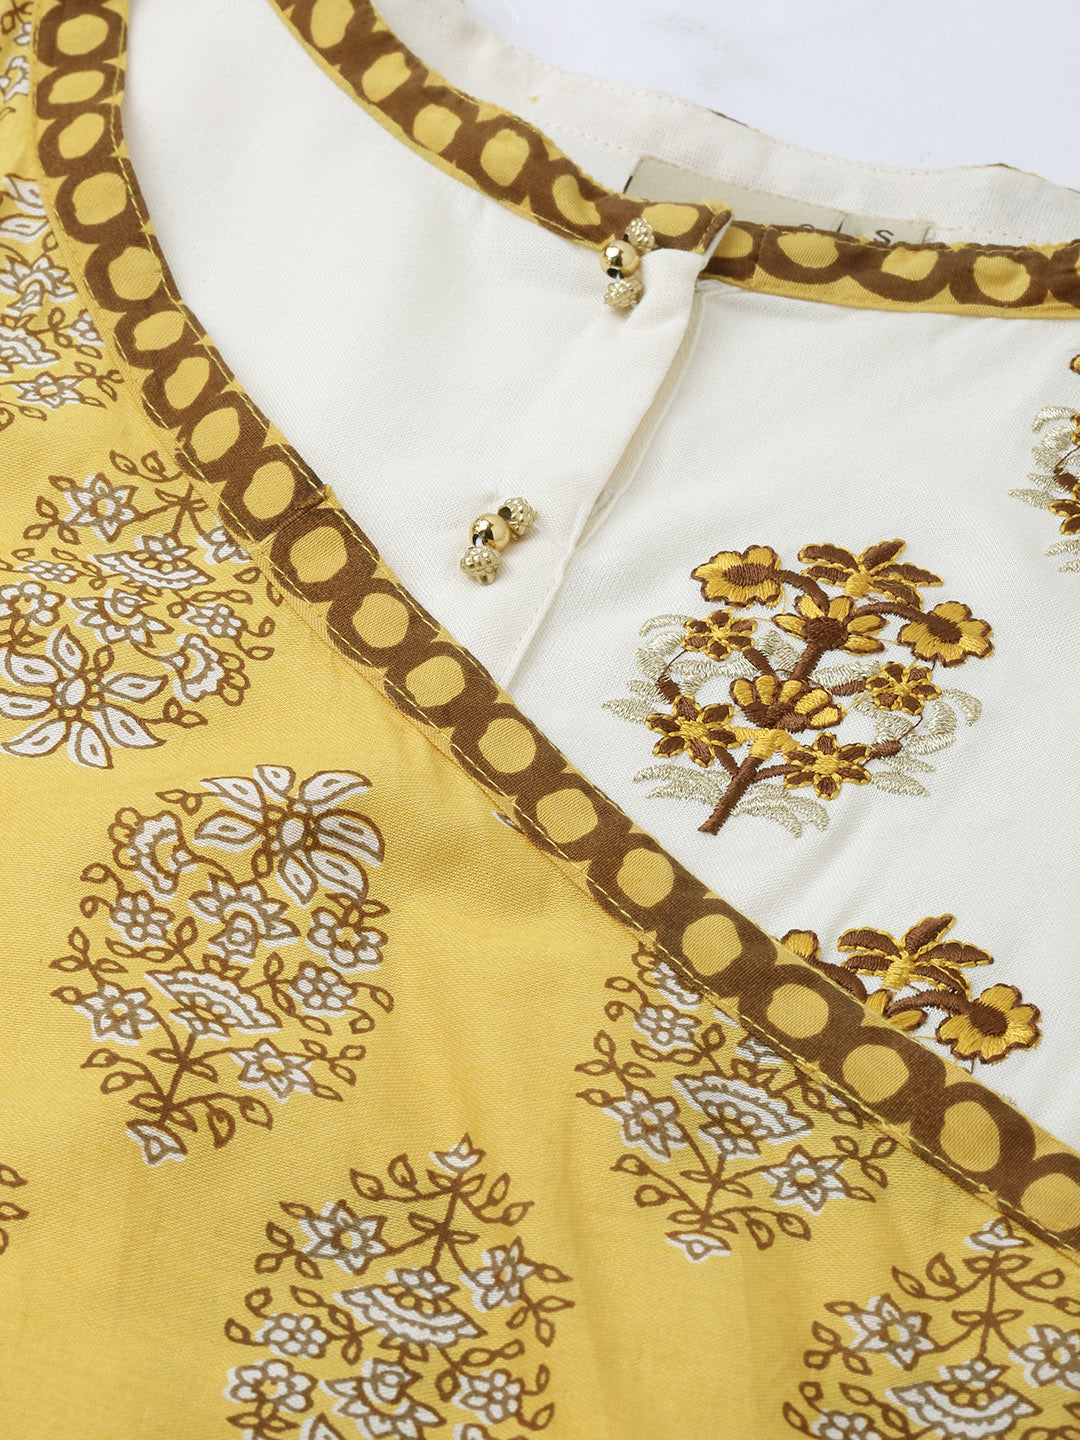 Neeru's Yellow Embroidered A Line Kurta